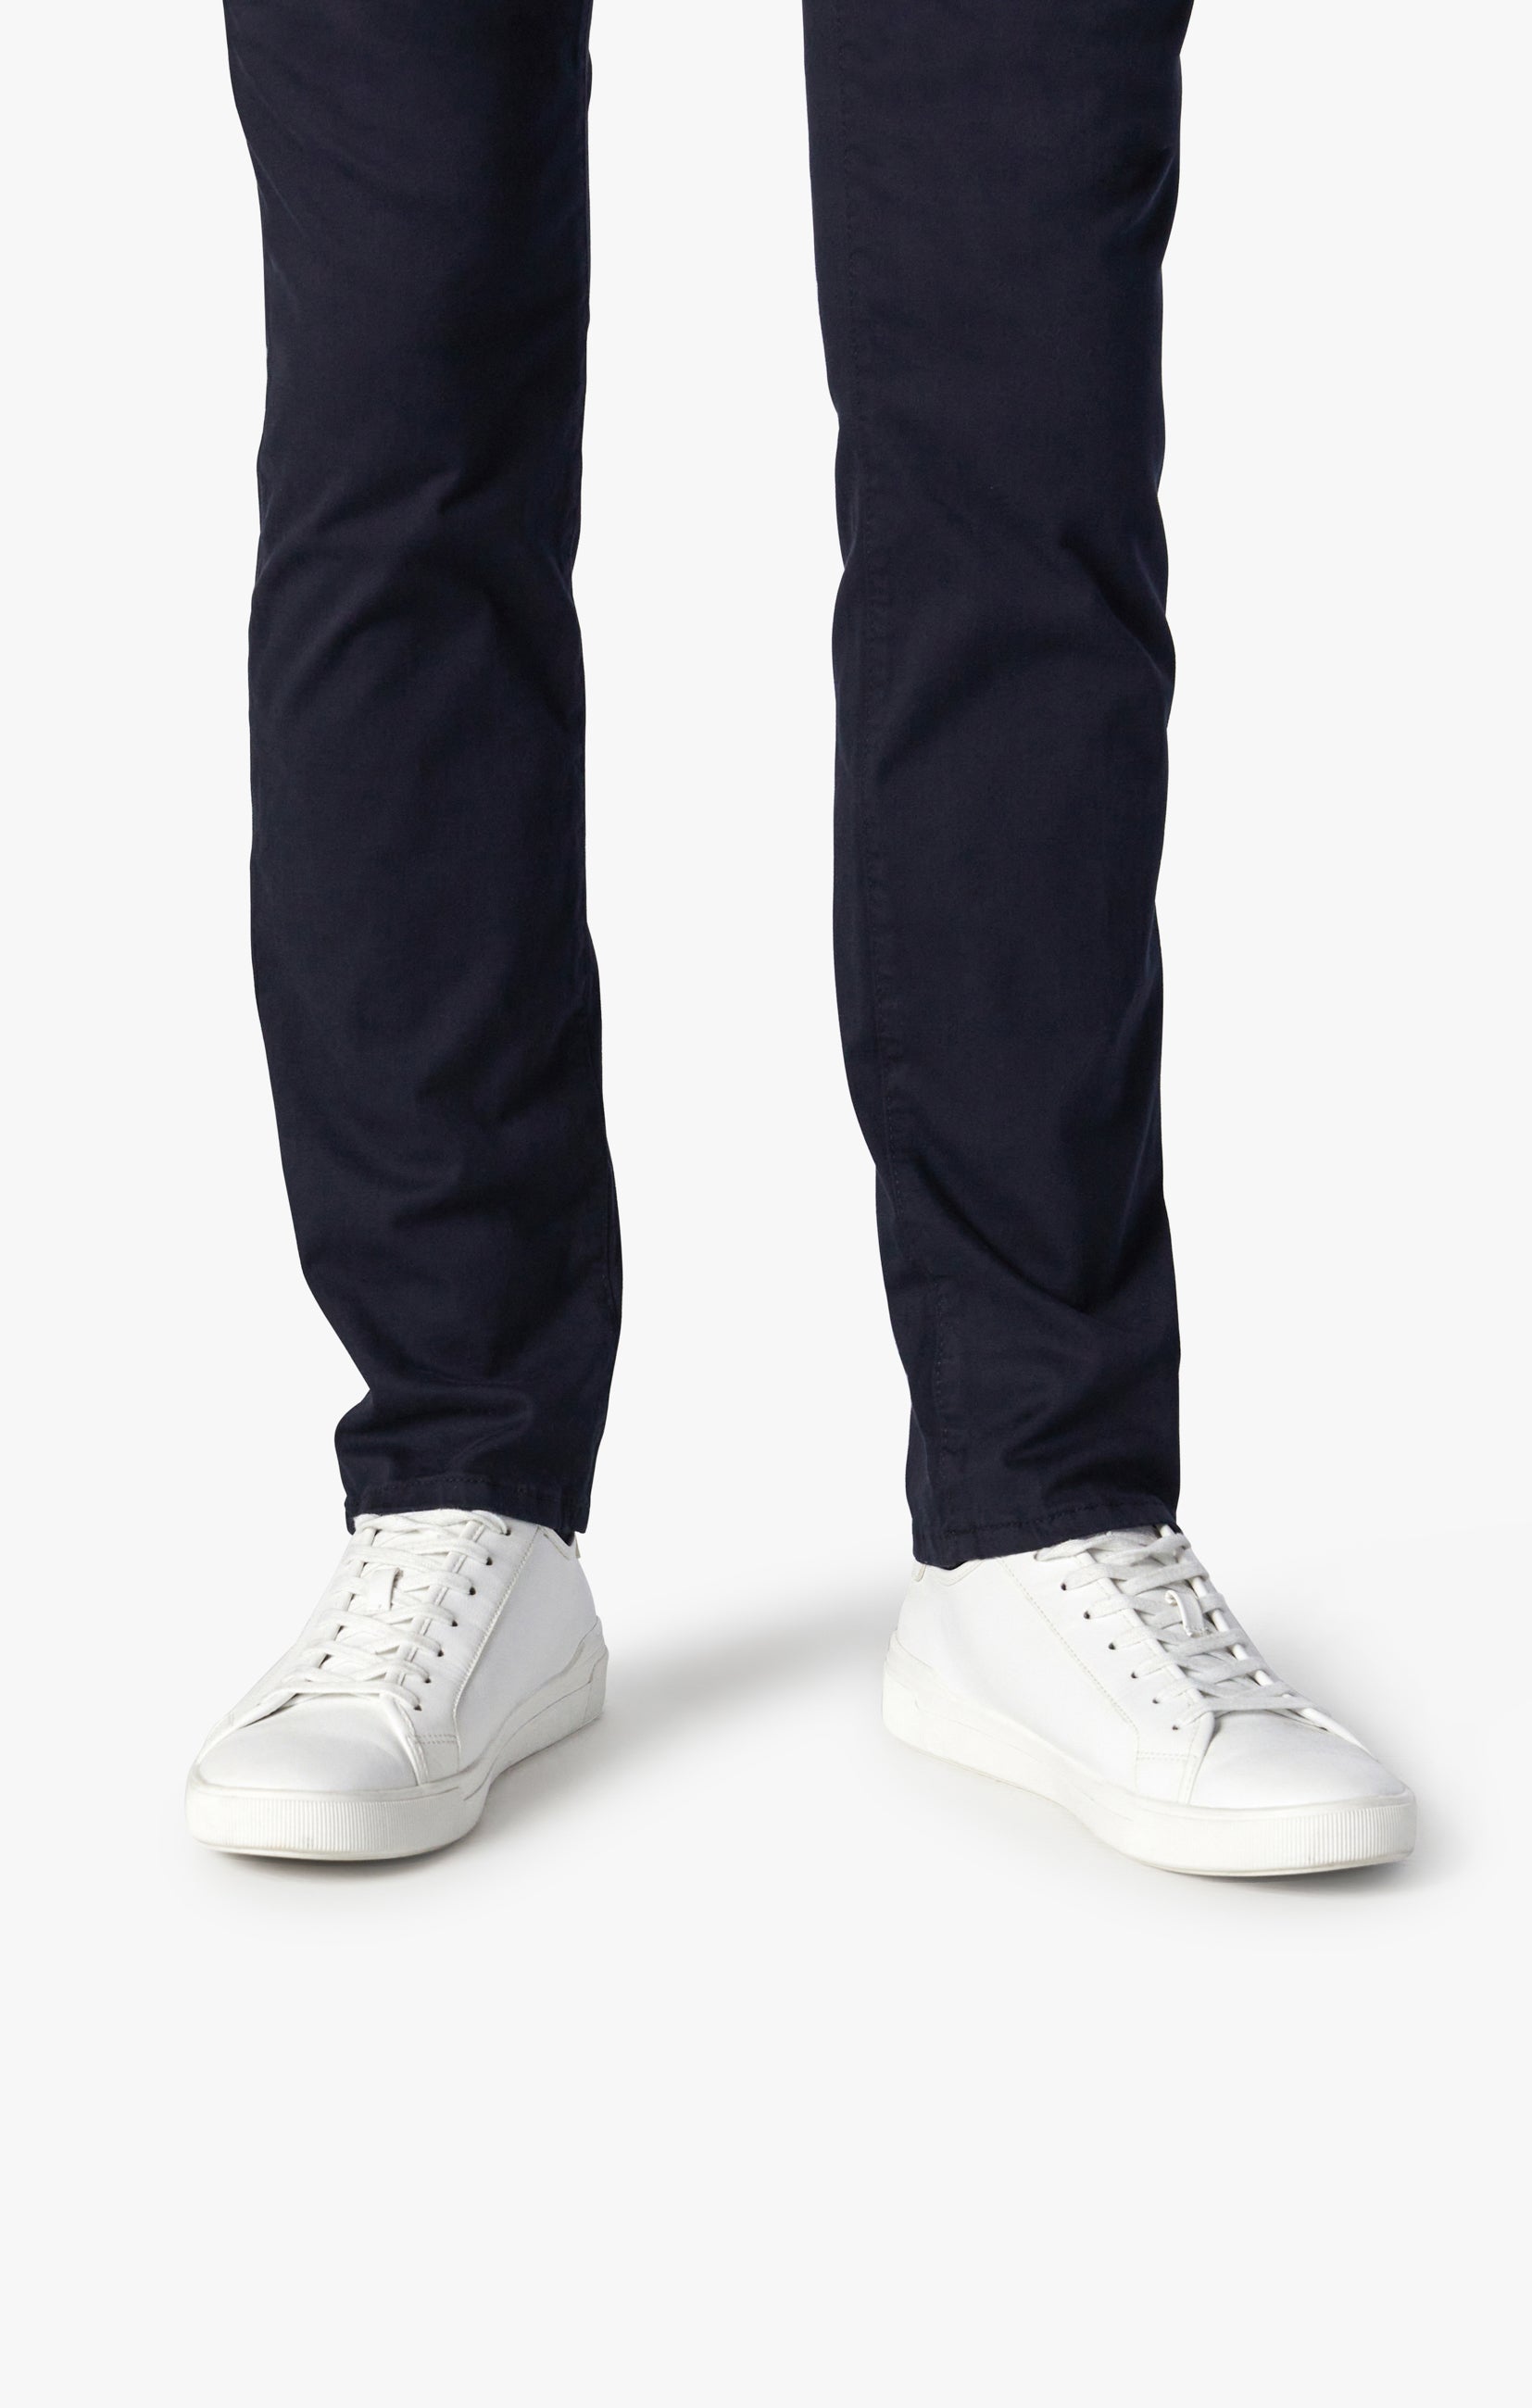 Cool Slim Leg Pants in Navy Twill Image 6